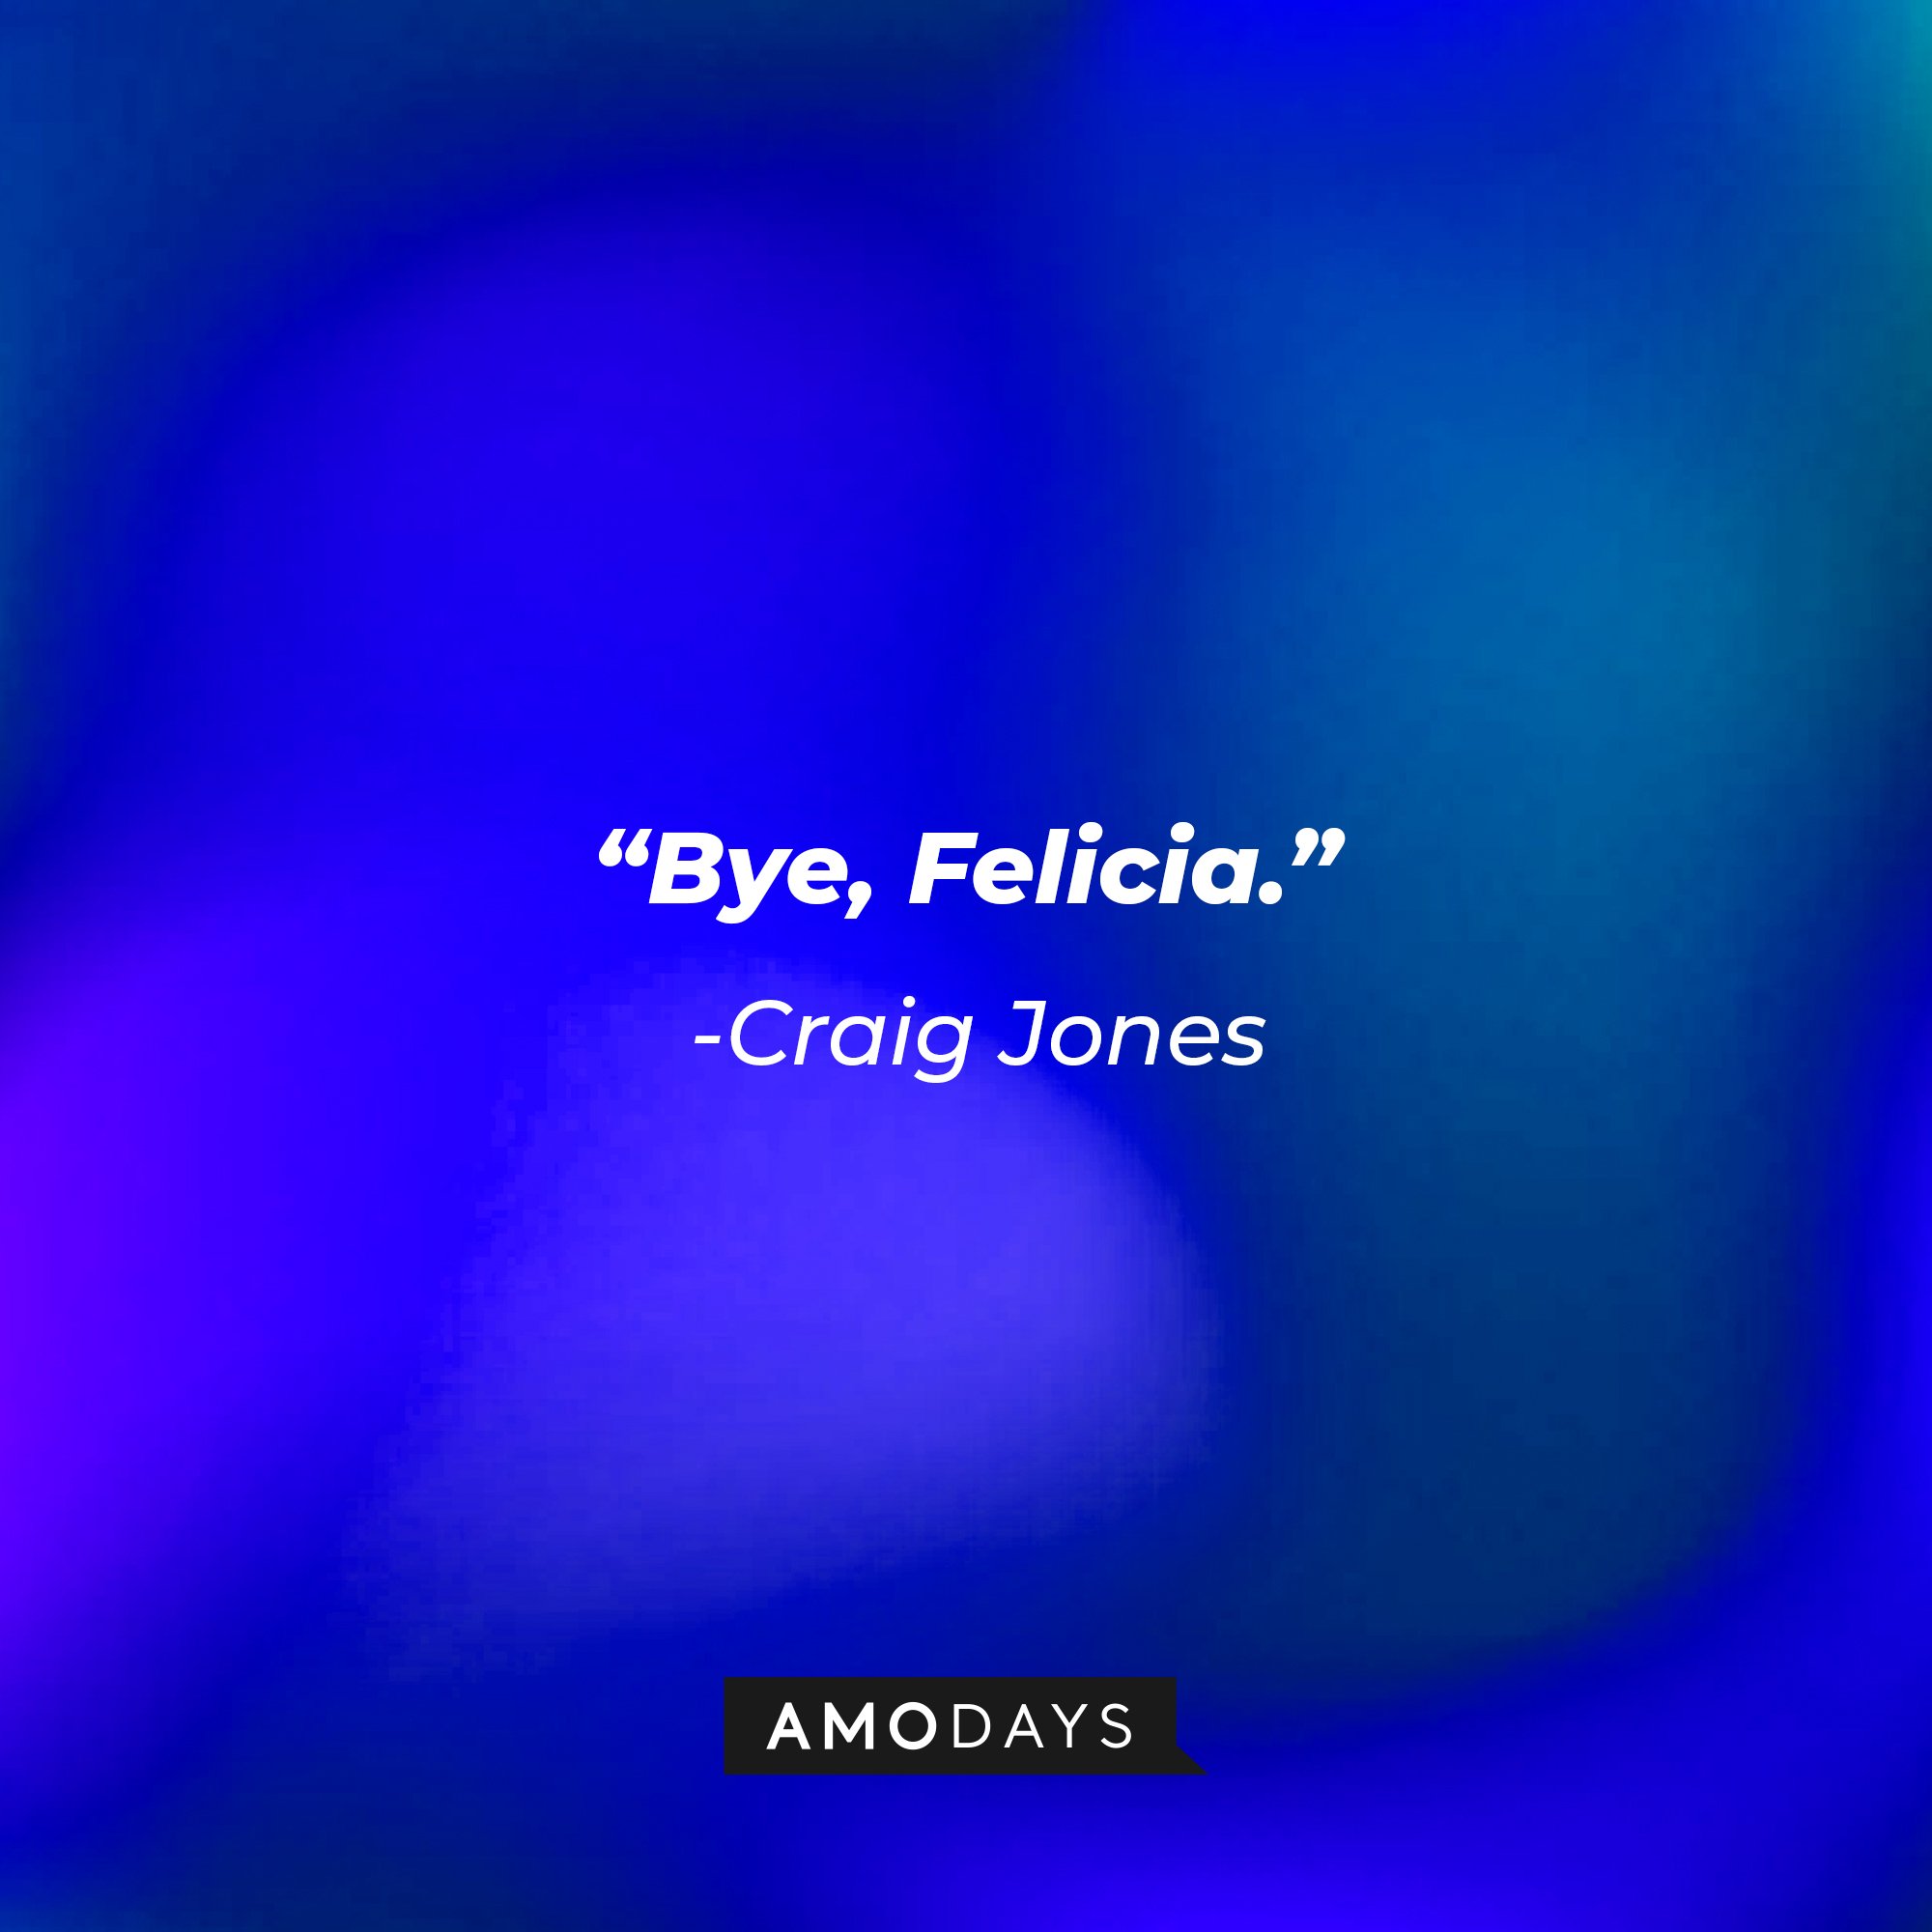 Craig Jones’ quote: “Bye, Felicia” | Image: AmoDays